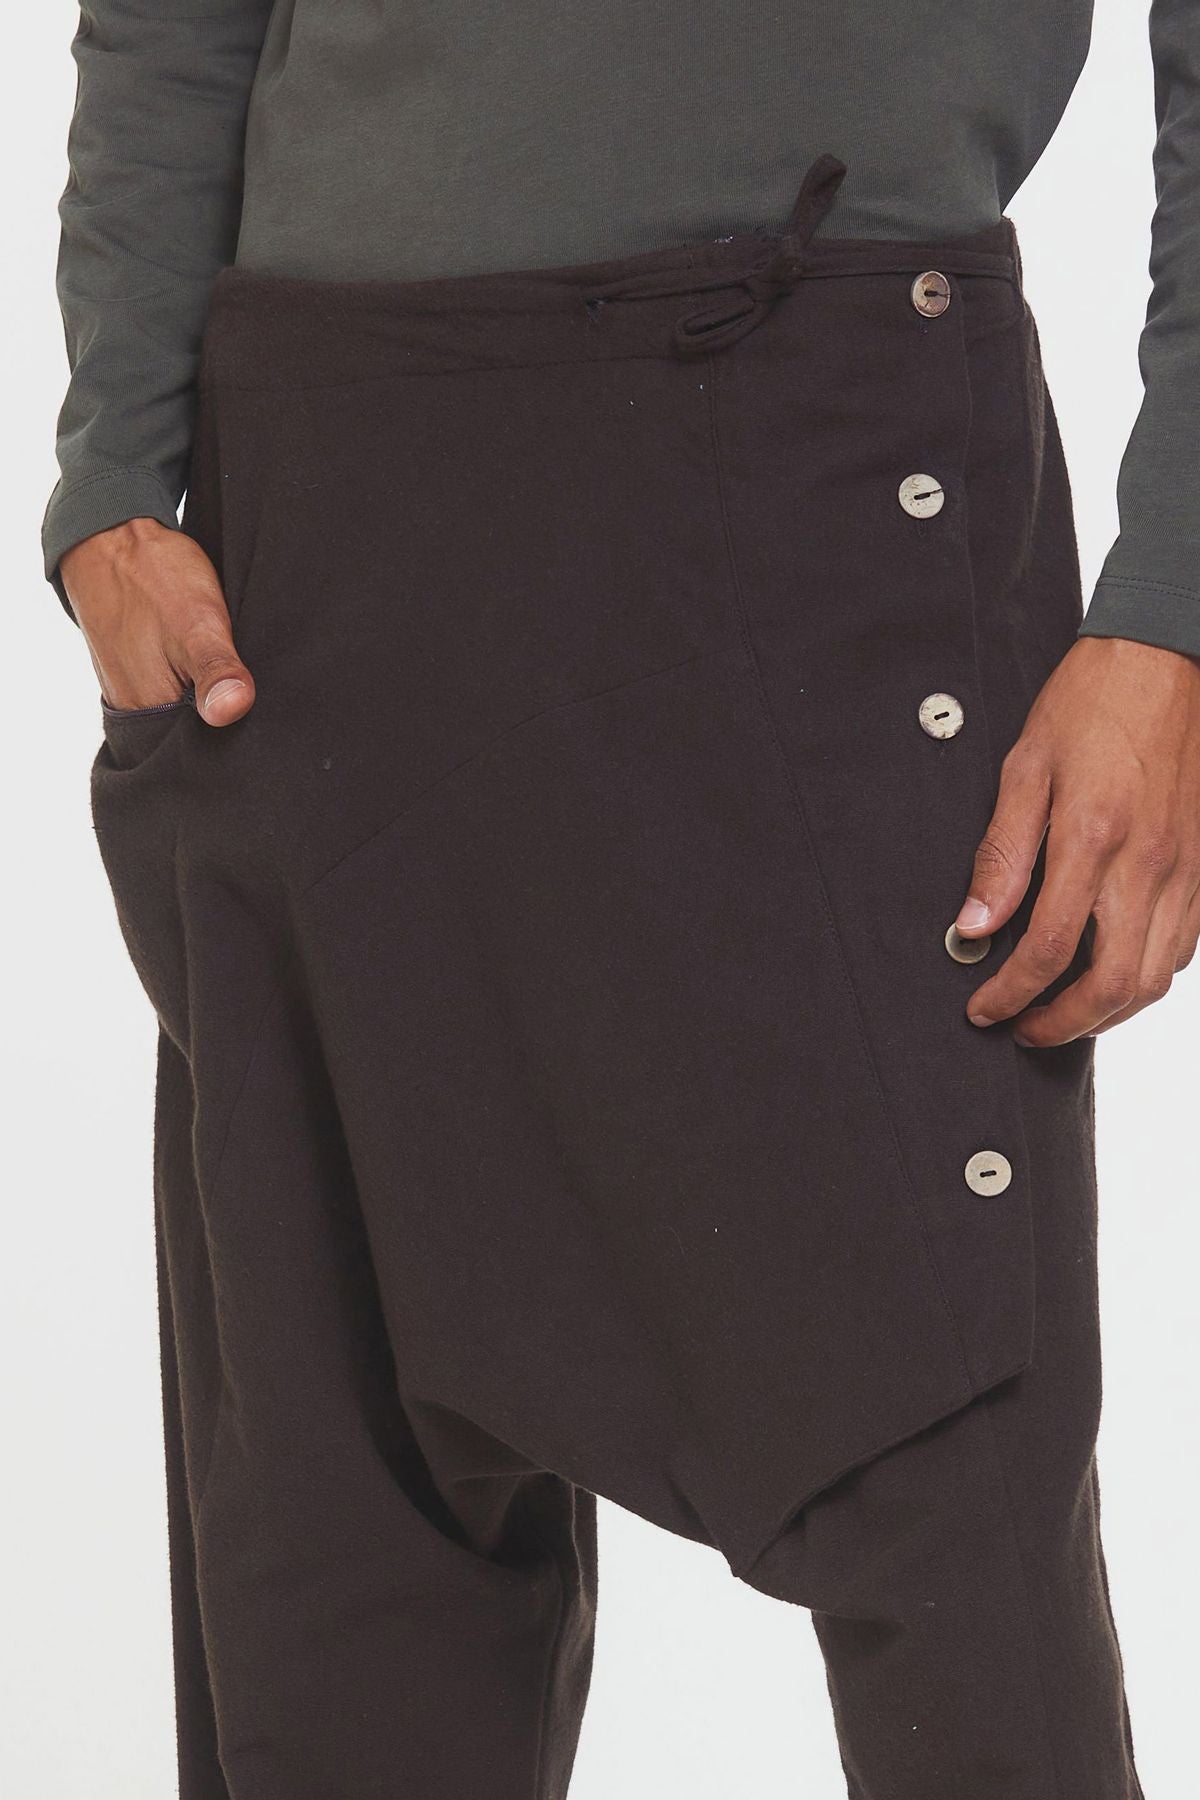 Elastic Cuff Men's Winter Harem Pants with Pocket Brown